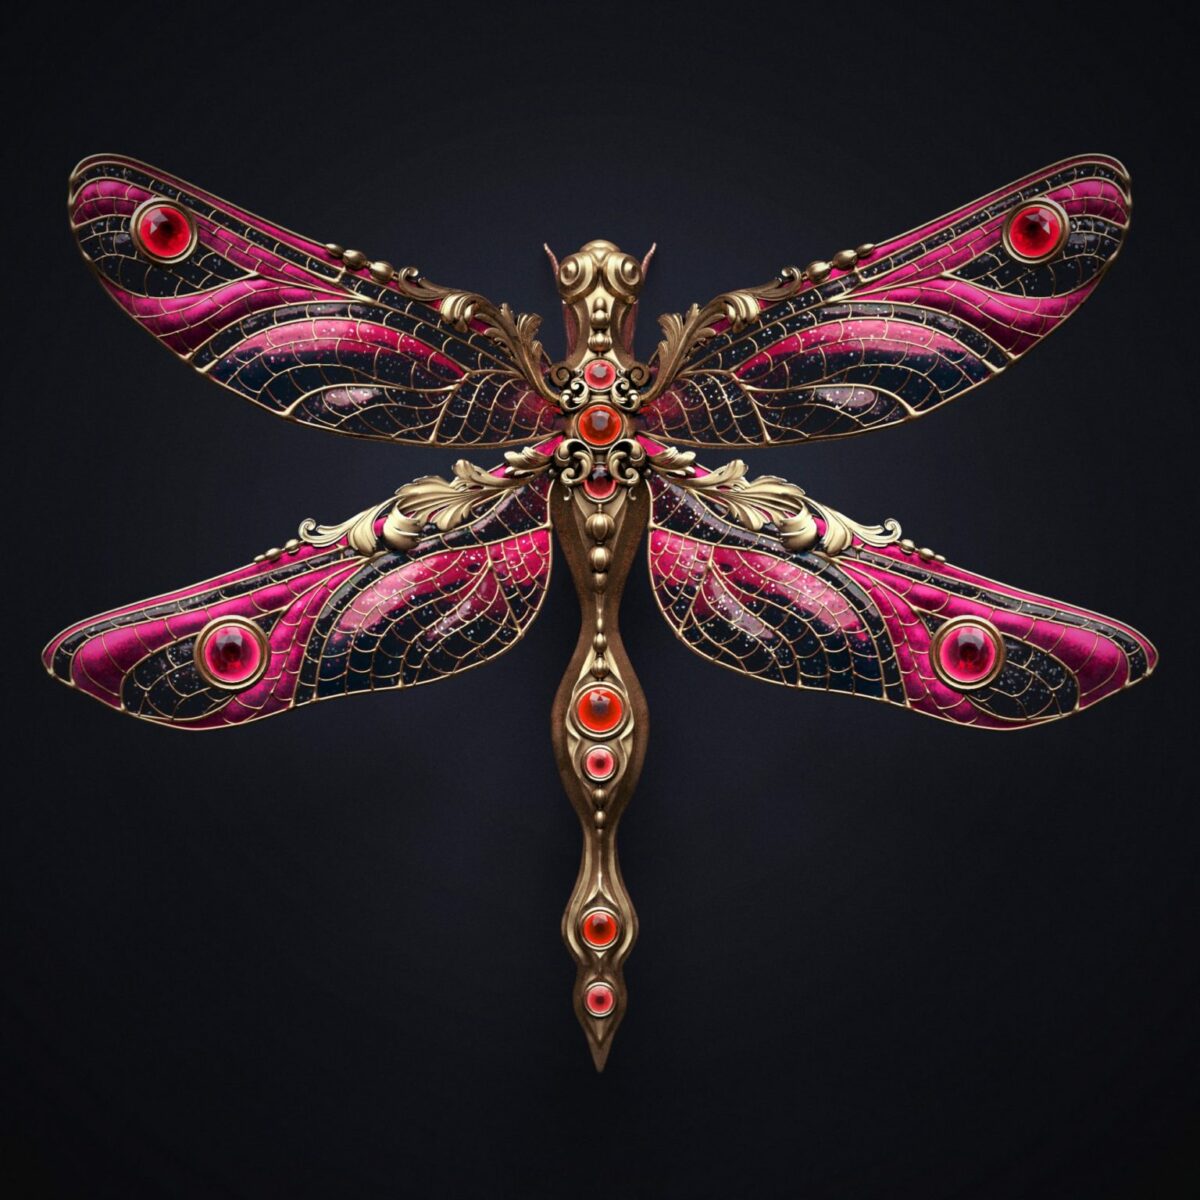 Jewel Insects Awesome Hyper Realistic Digital Jewelry By Sasha Vinogradova (5)